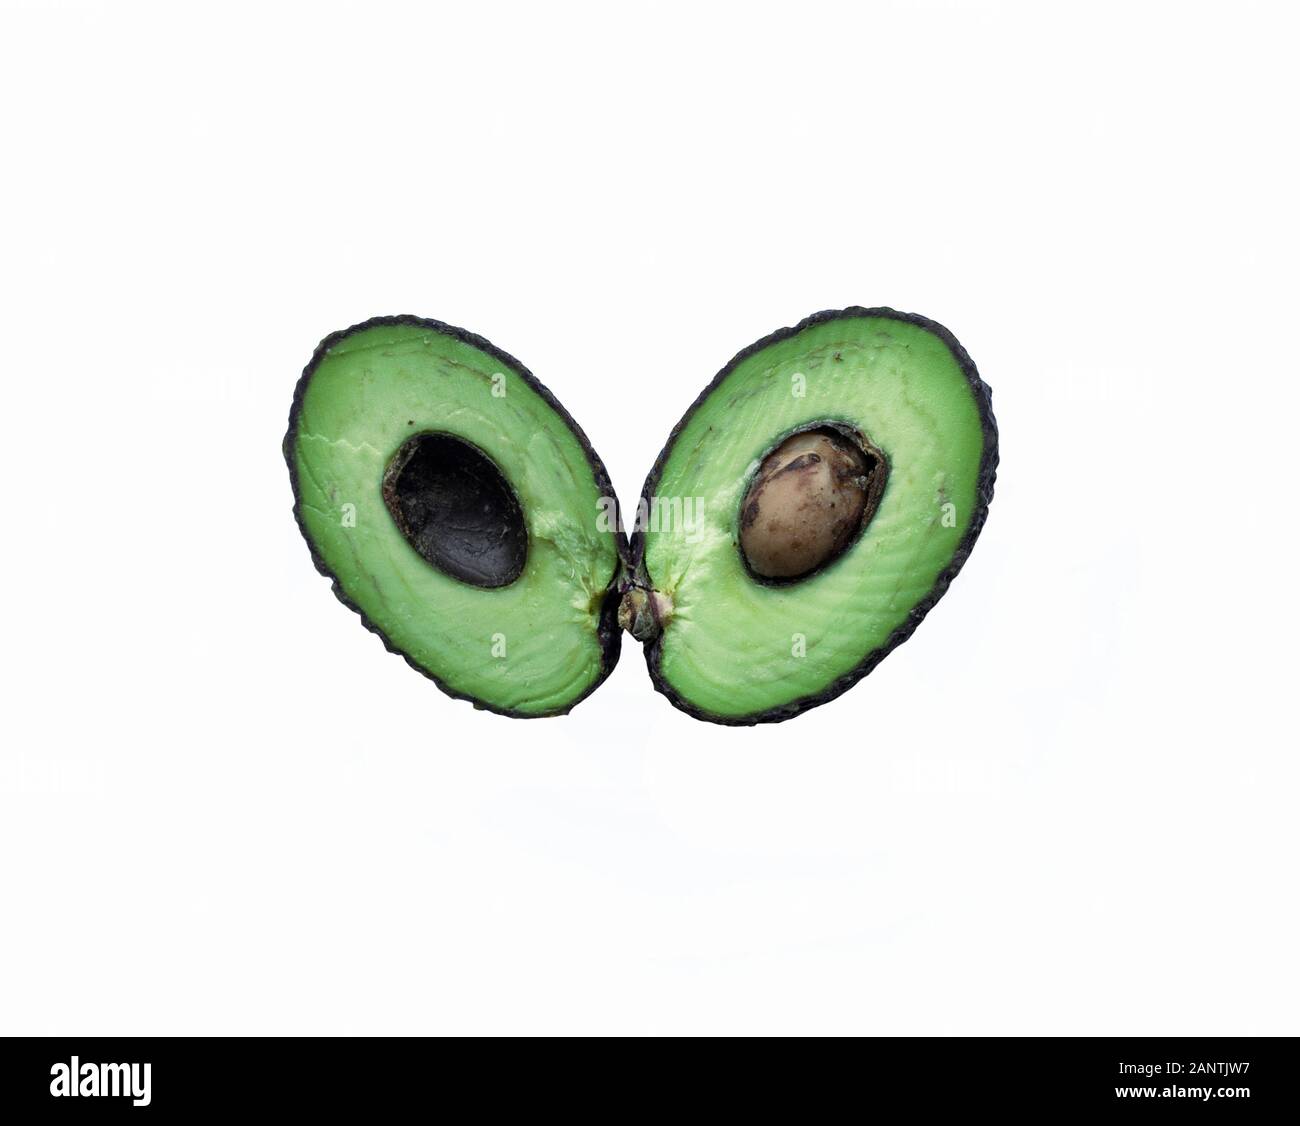 Ripe and fresh baby avocado shaped like a heart, isolated on white background Stock Photo